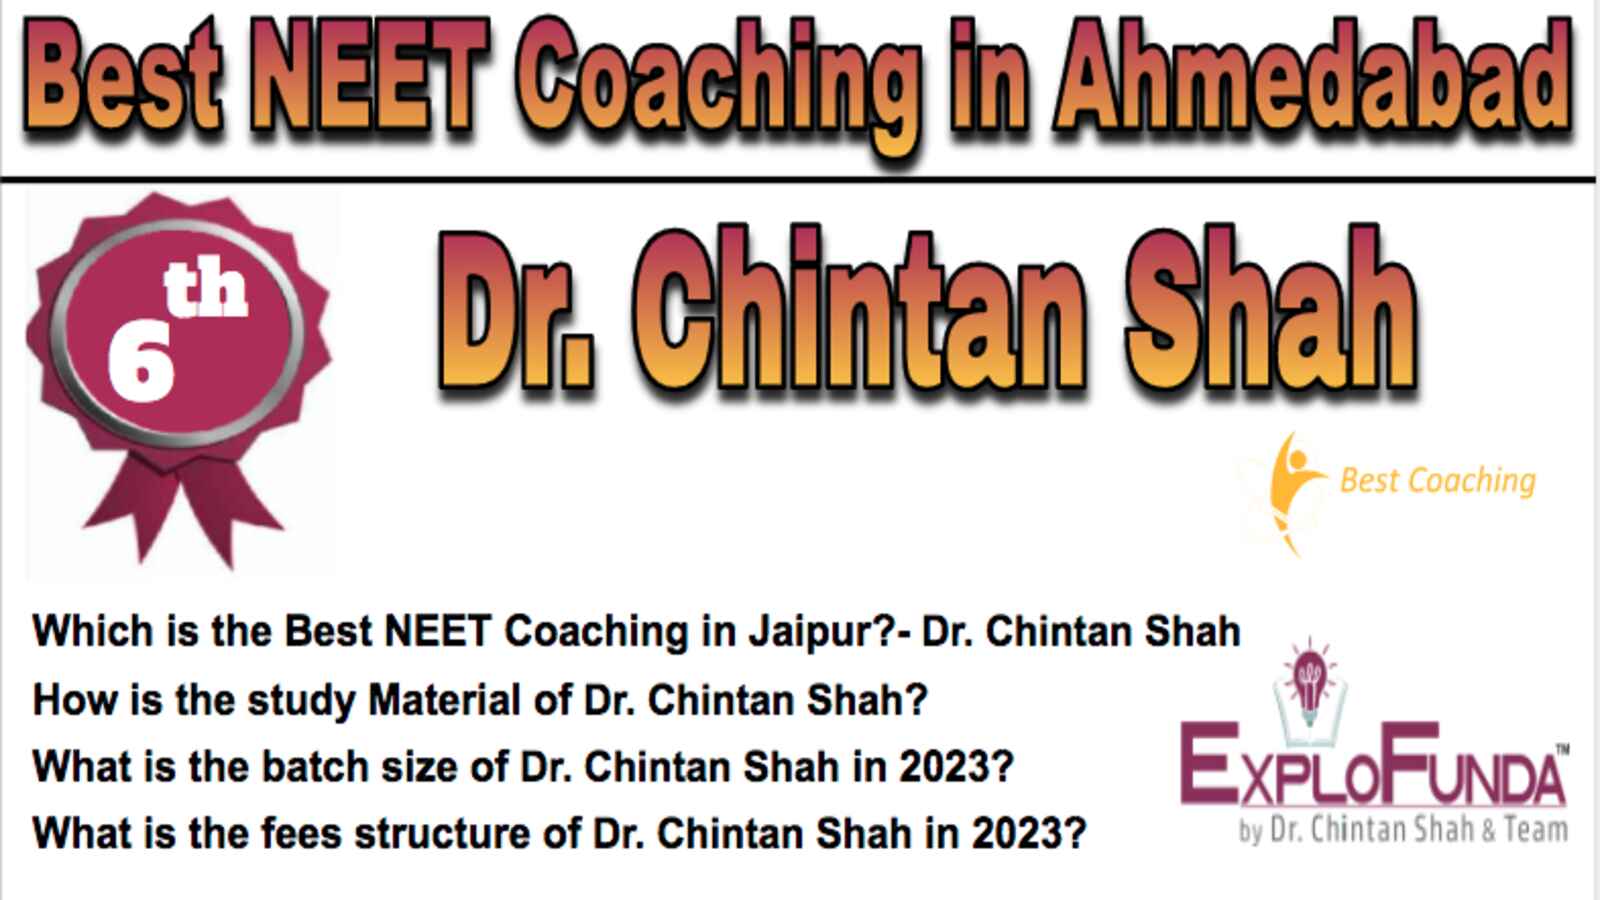 Rank 6 Best NEET Coaching in Ahmedabad